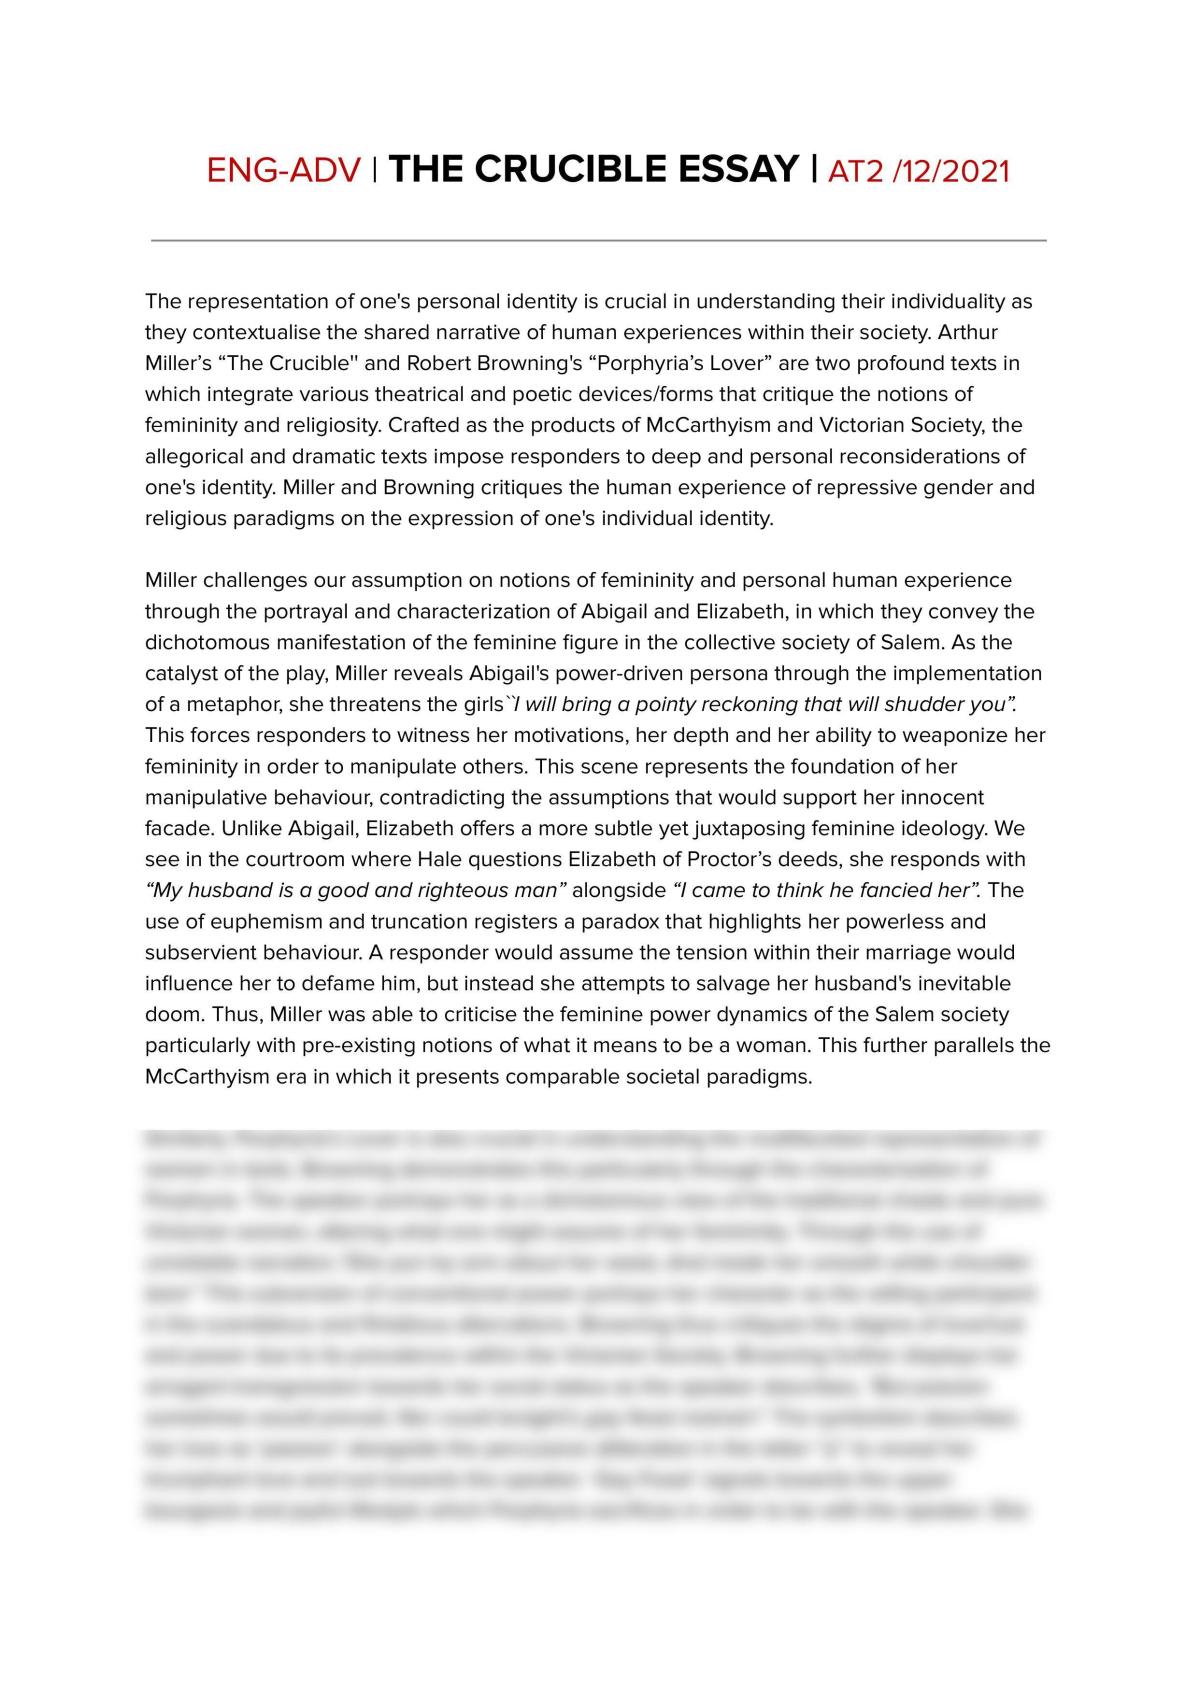 crucible essay pdf